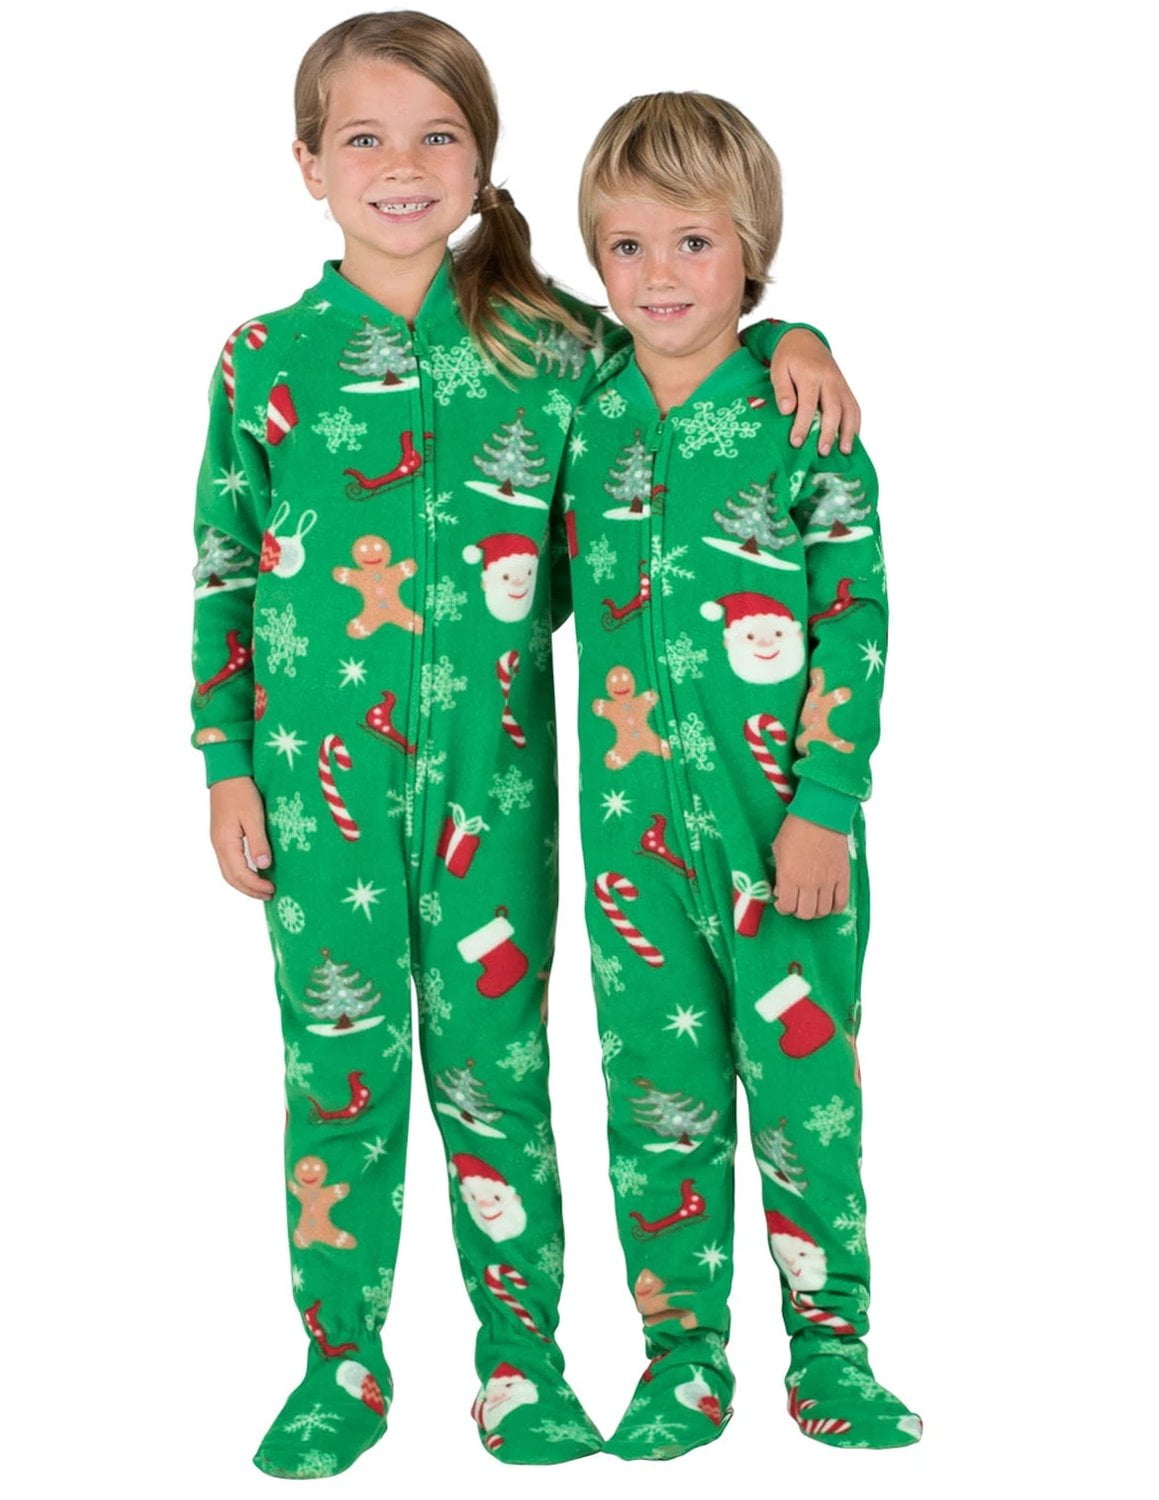 Sleep Play Xmas Fleece Boys Sleeper Warm Outfit Footed Pajamas Coverall Holiday 